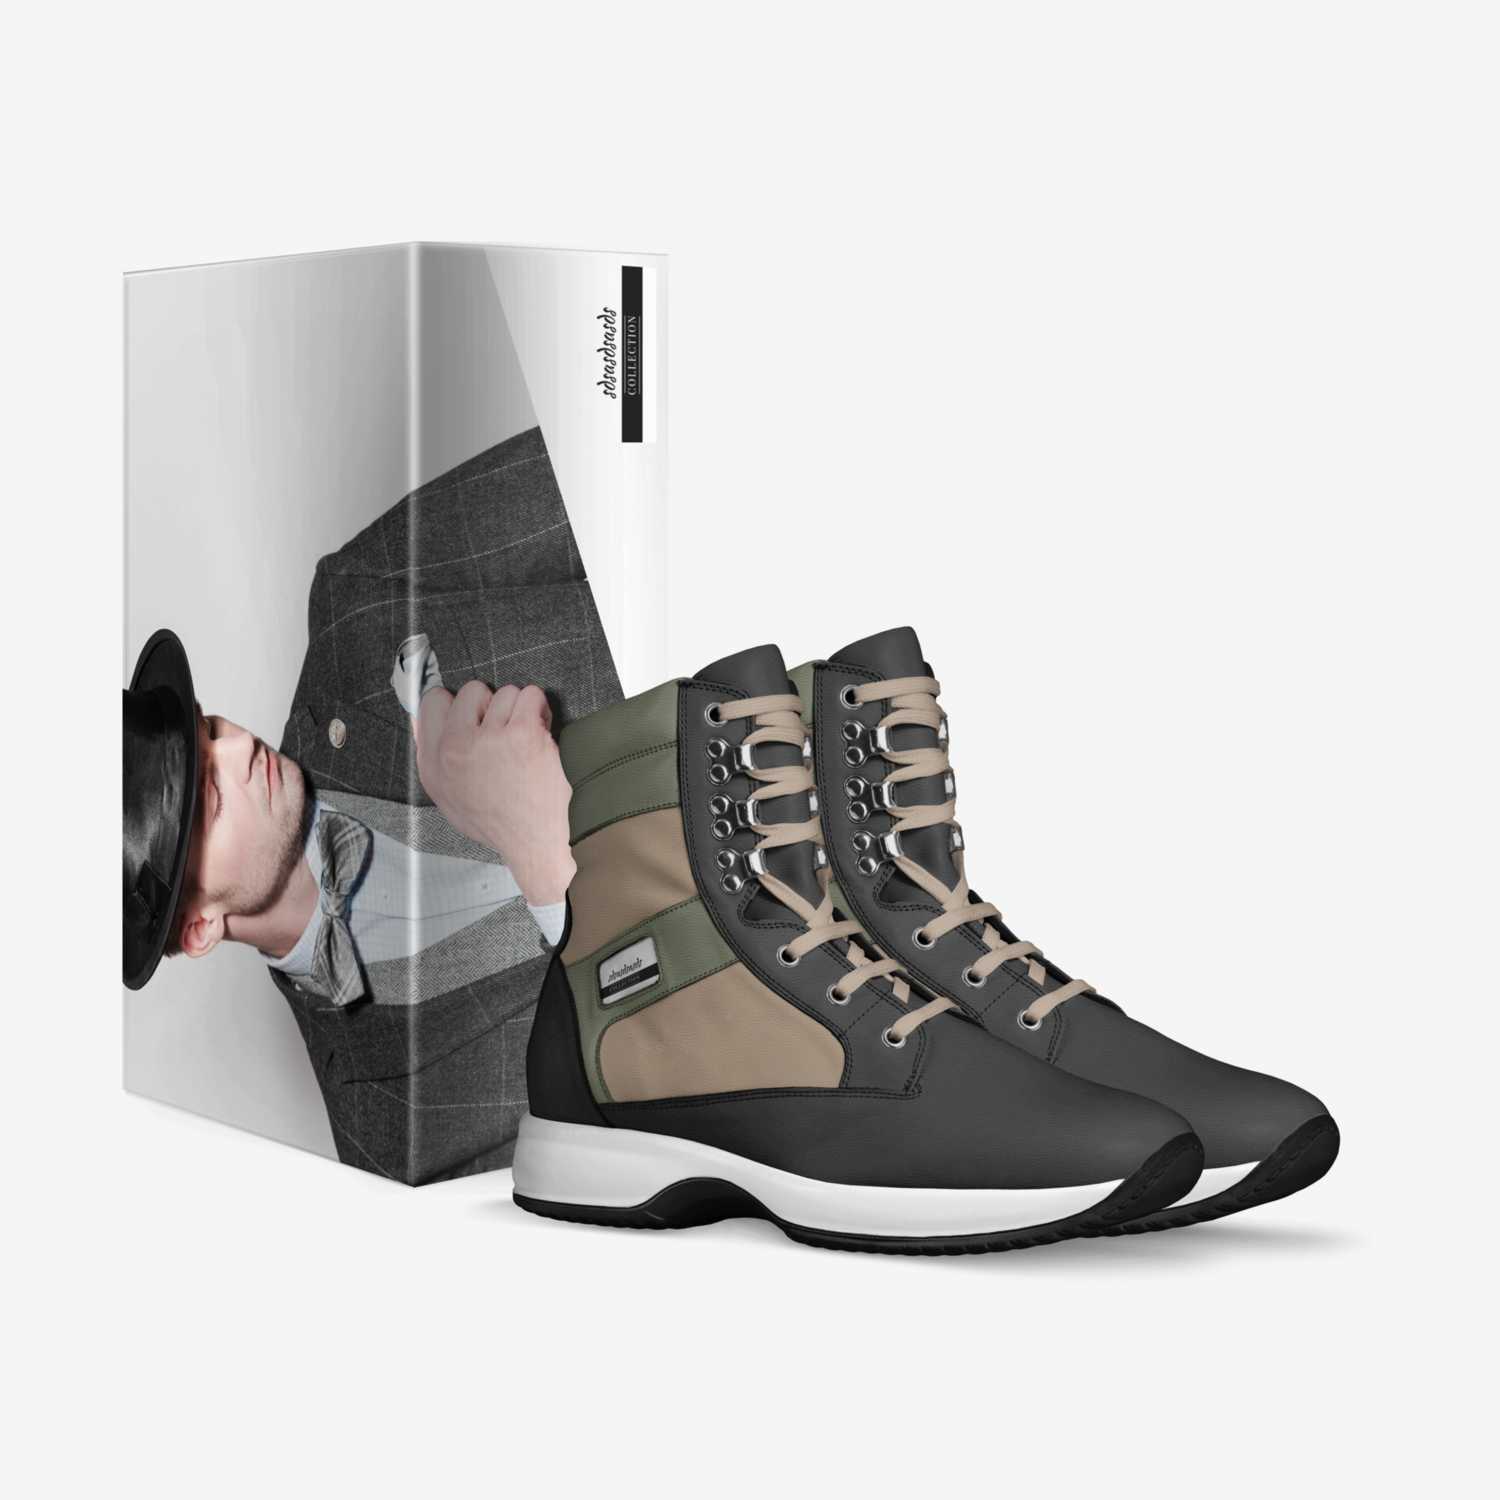 sdsasdsasds custom made in Italy shoes by Ab Yqa Gha | Box view